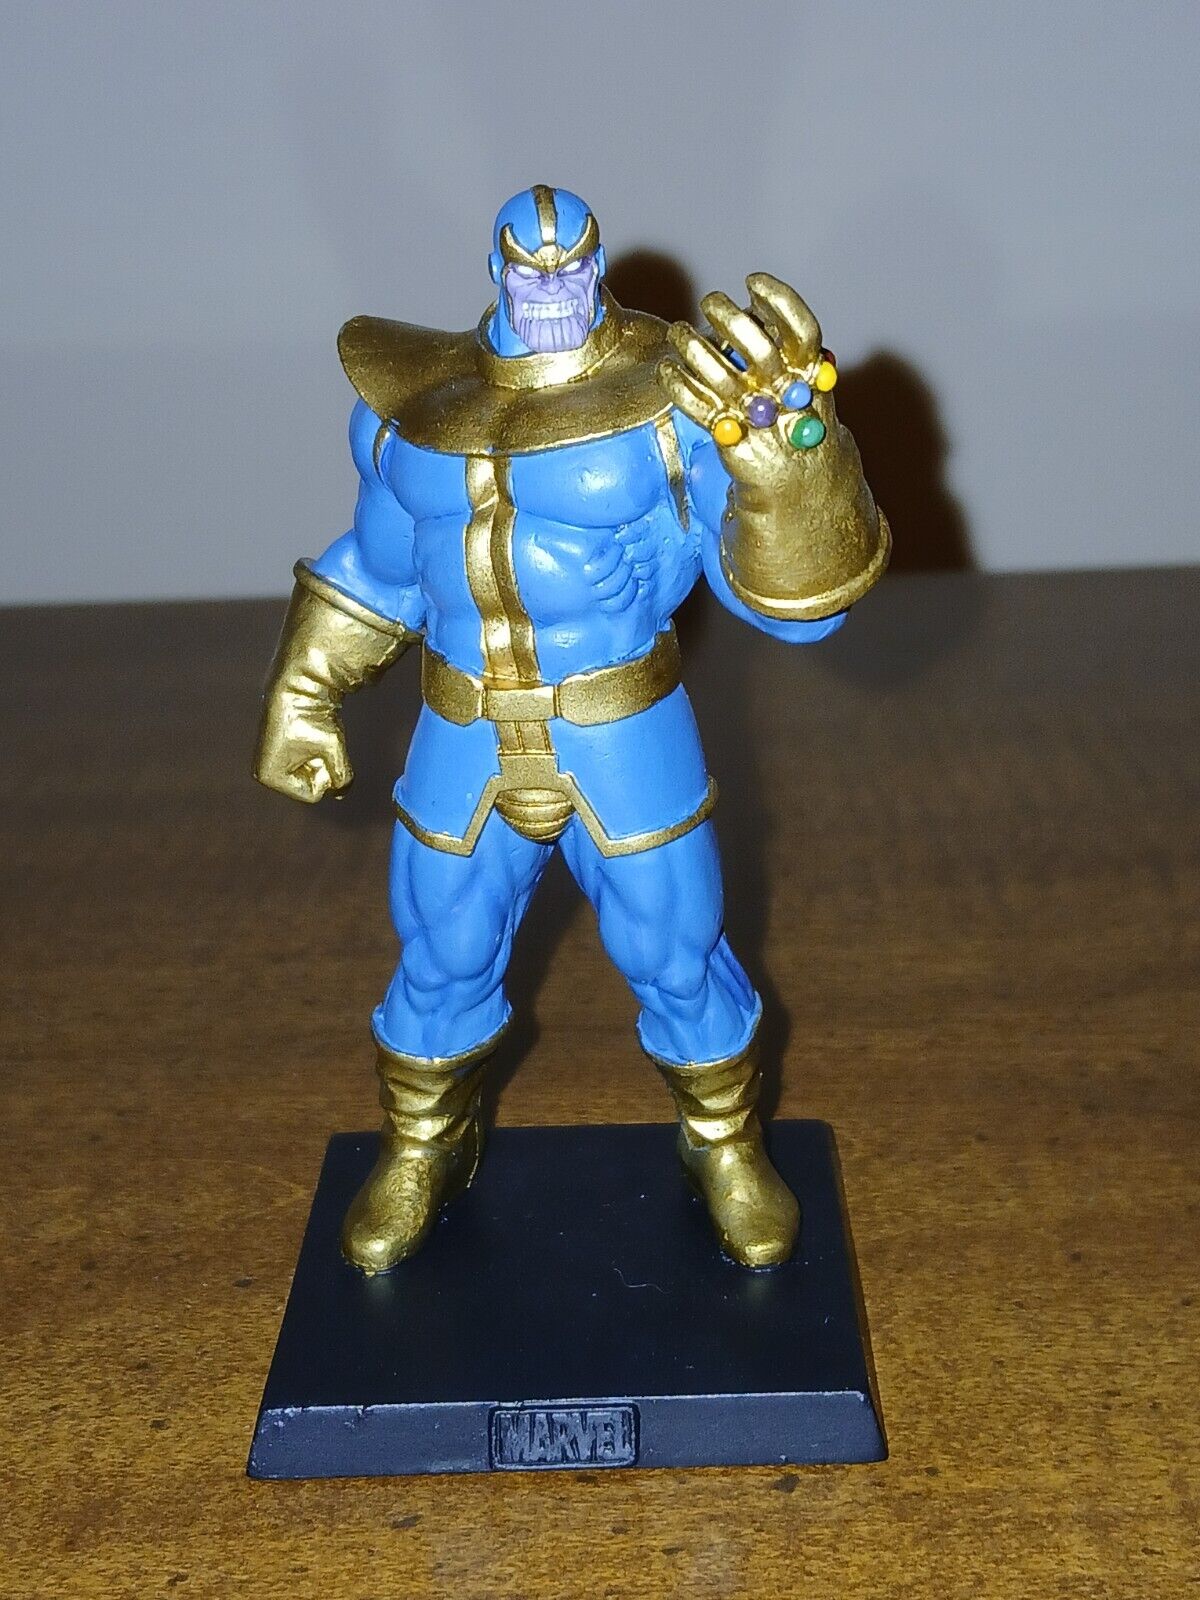 Marvel Special Thanos Figure by Eaglemoss